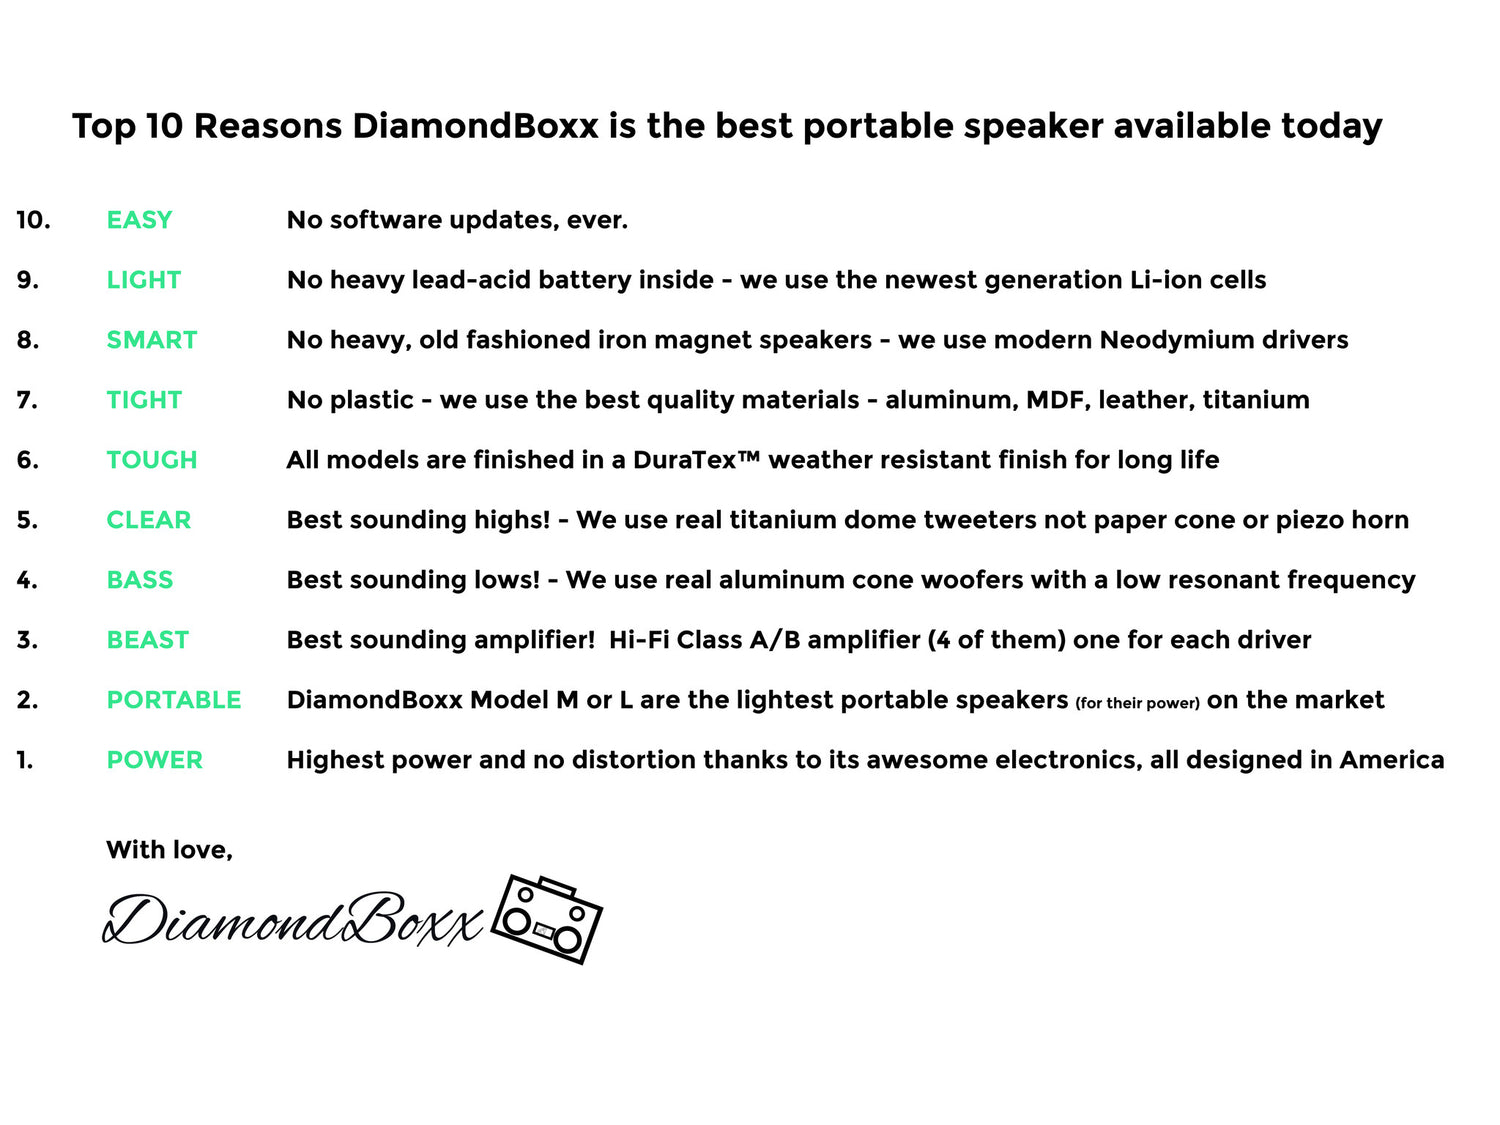 TOP 10 Reasons DiamondBoxx is the BEST